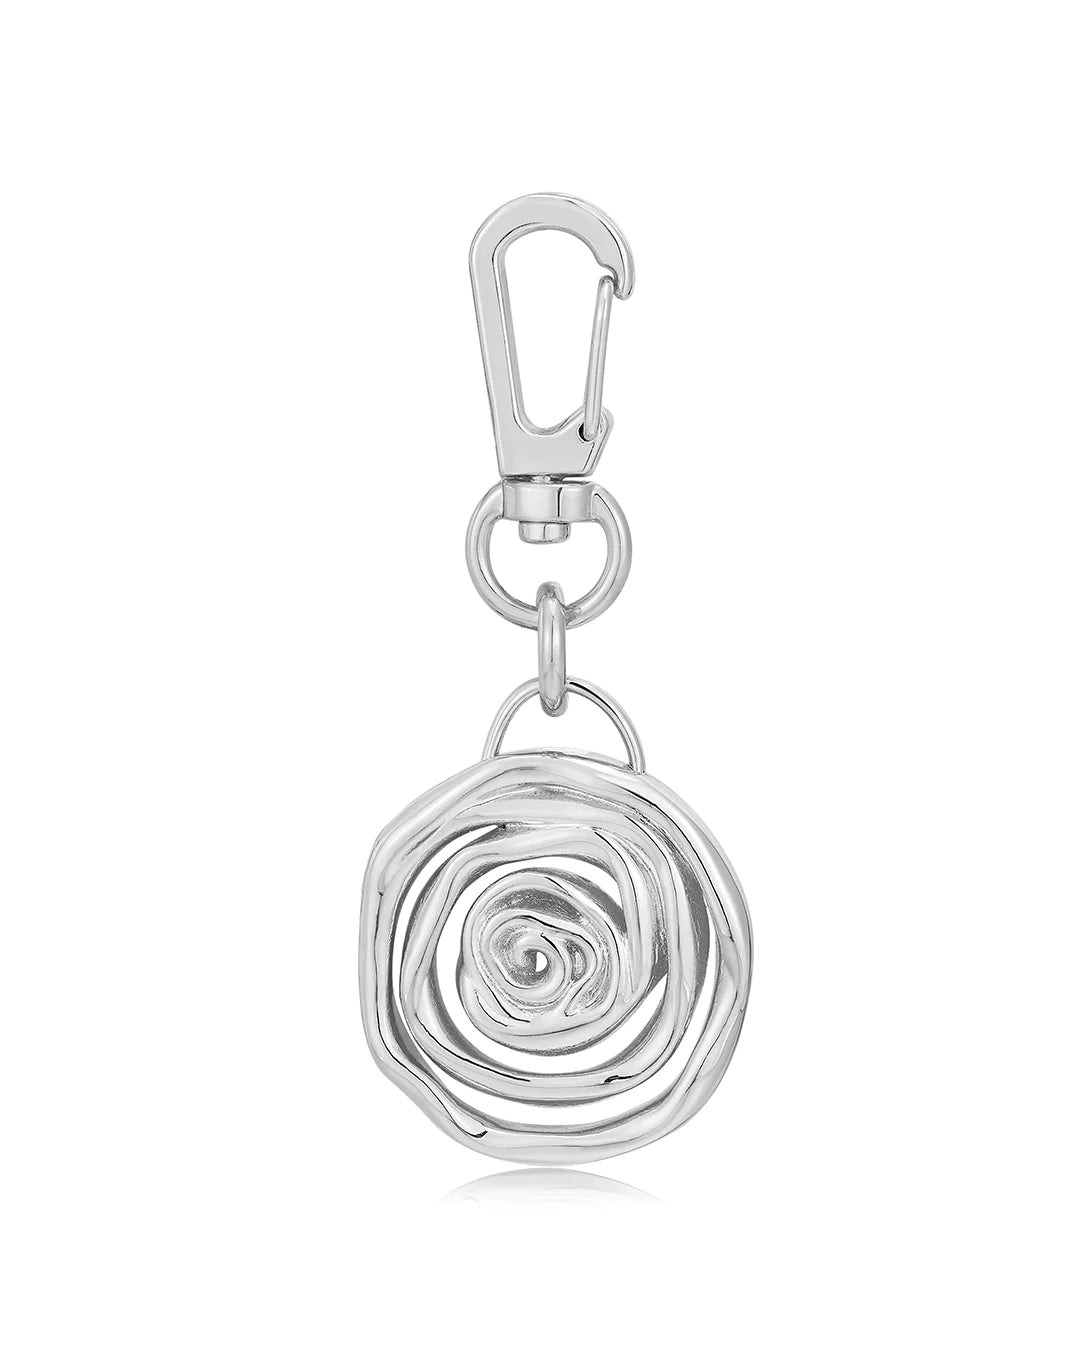 Rosette coil key chain - silver